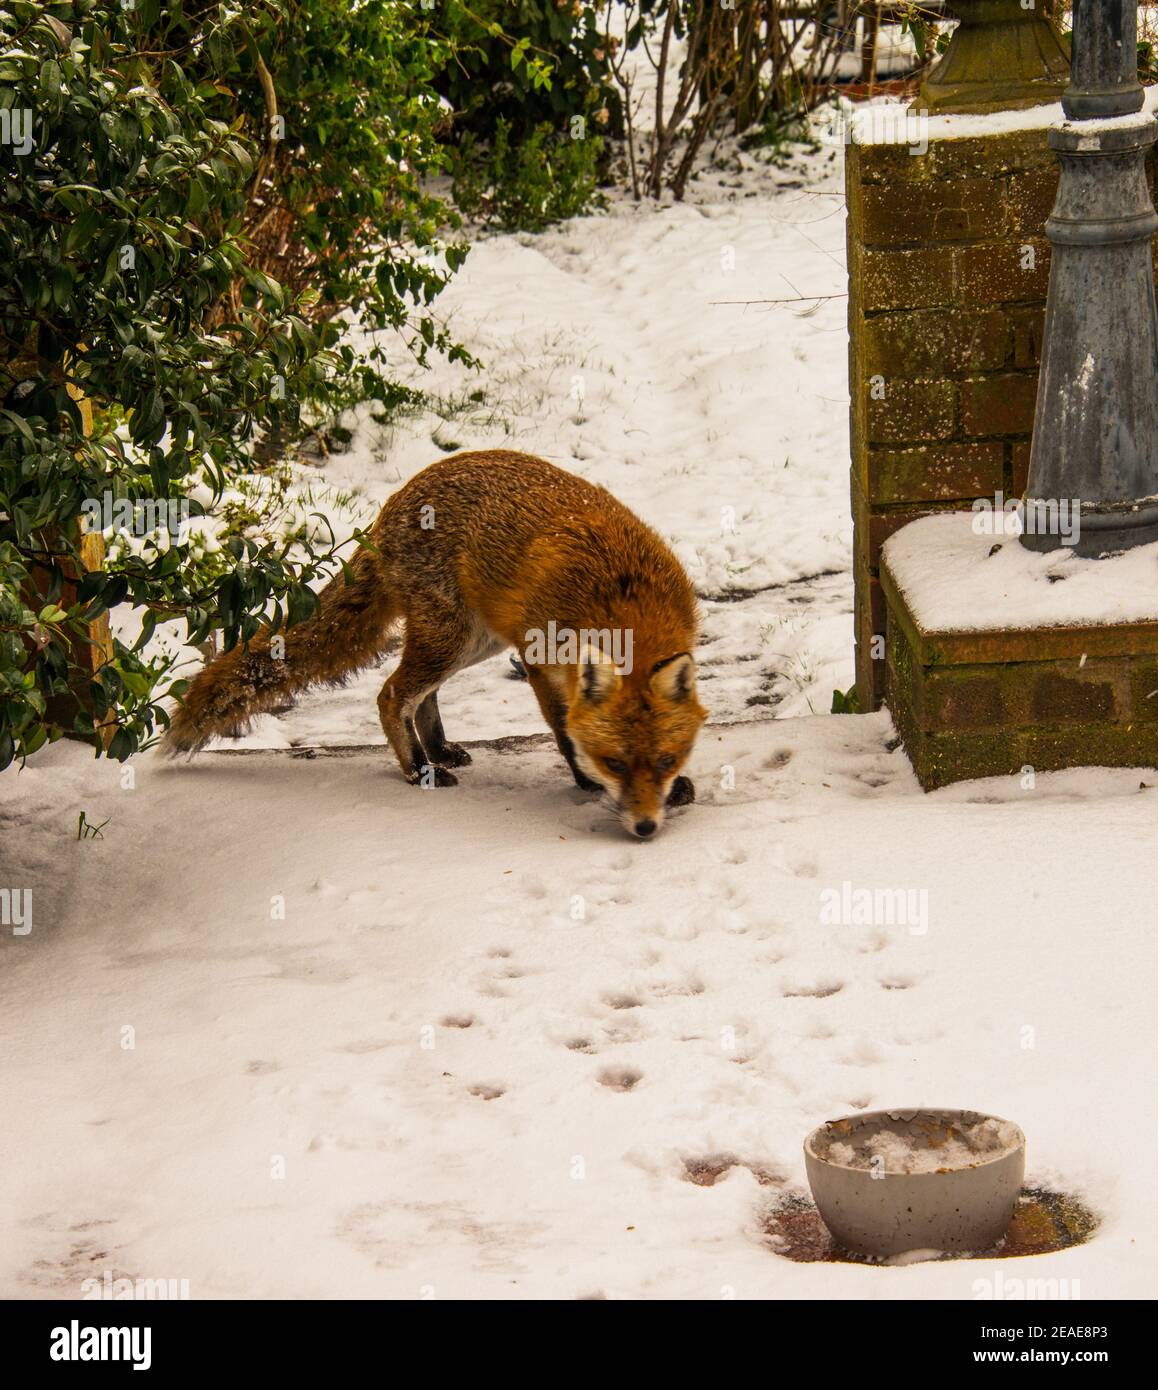 A red fox in an urban garden. Stock Photo